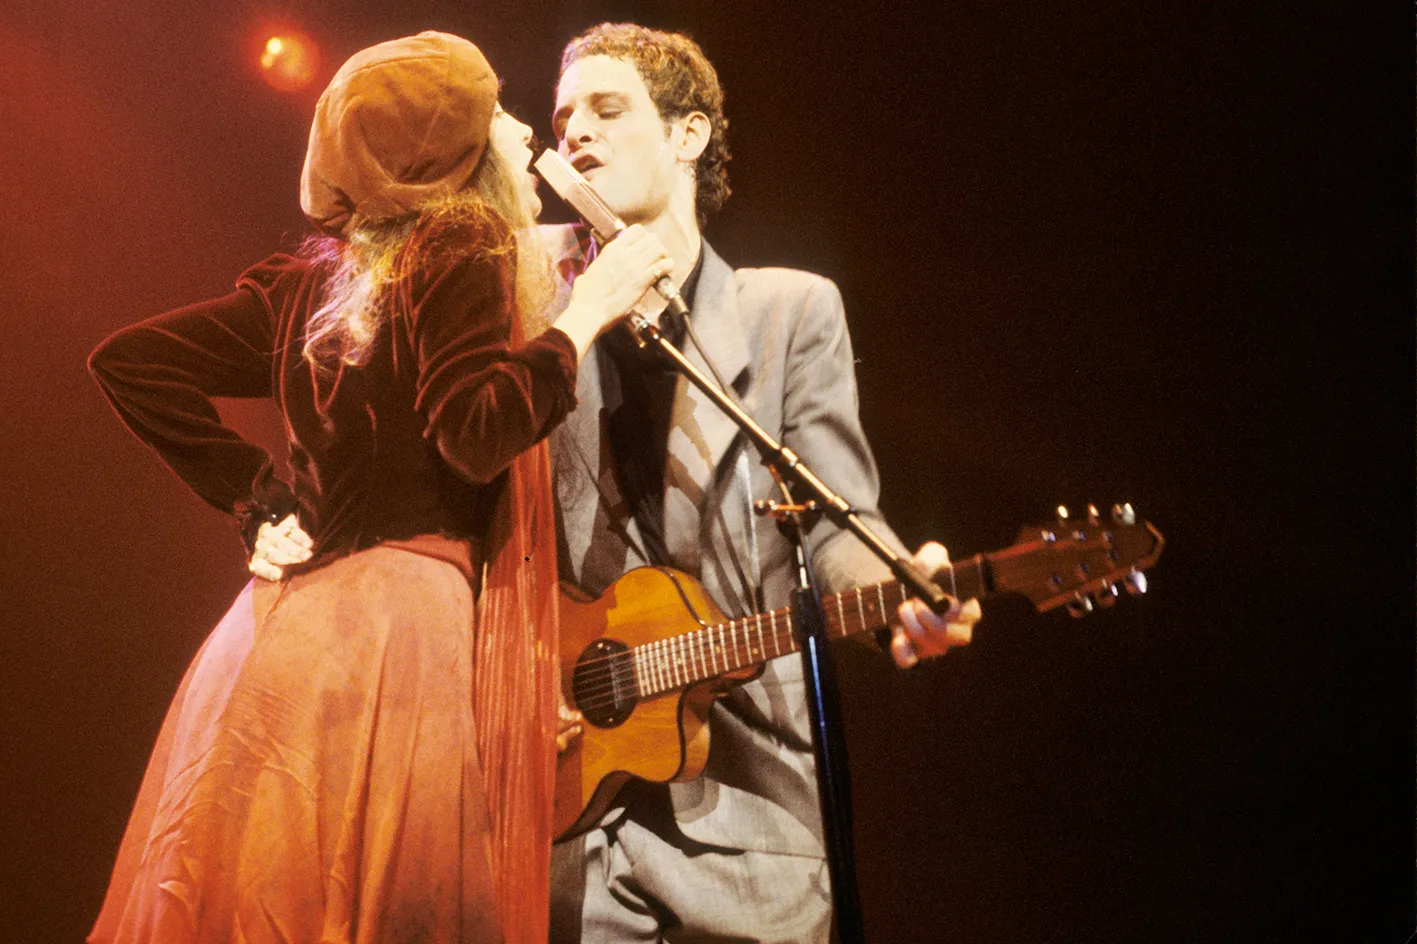 Stevie Nicks and Lindsey Buckingham perform on stage together. 